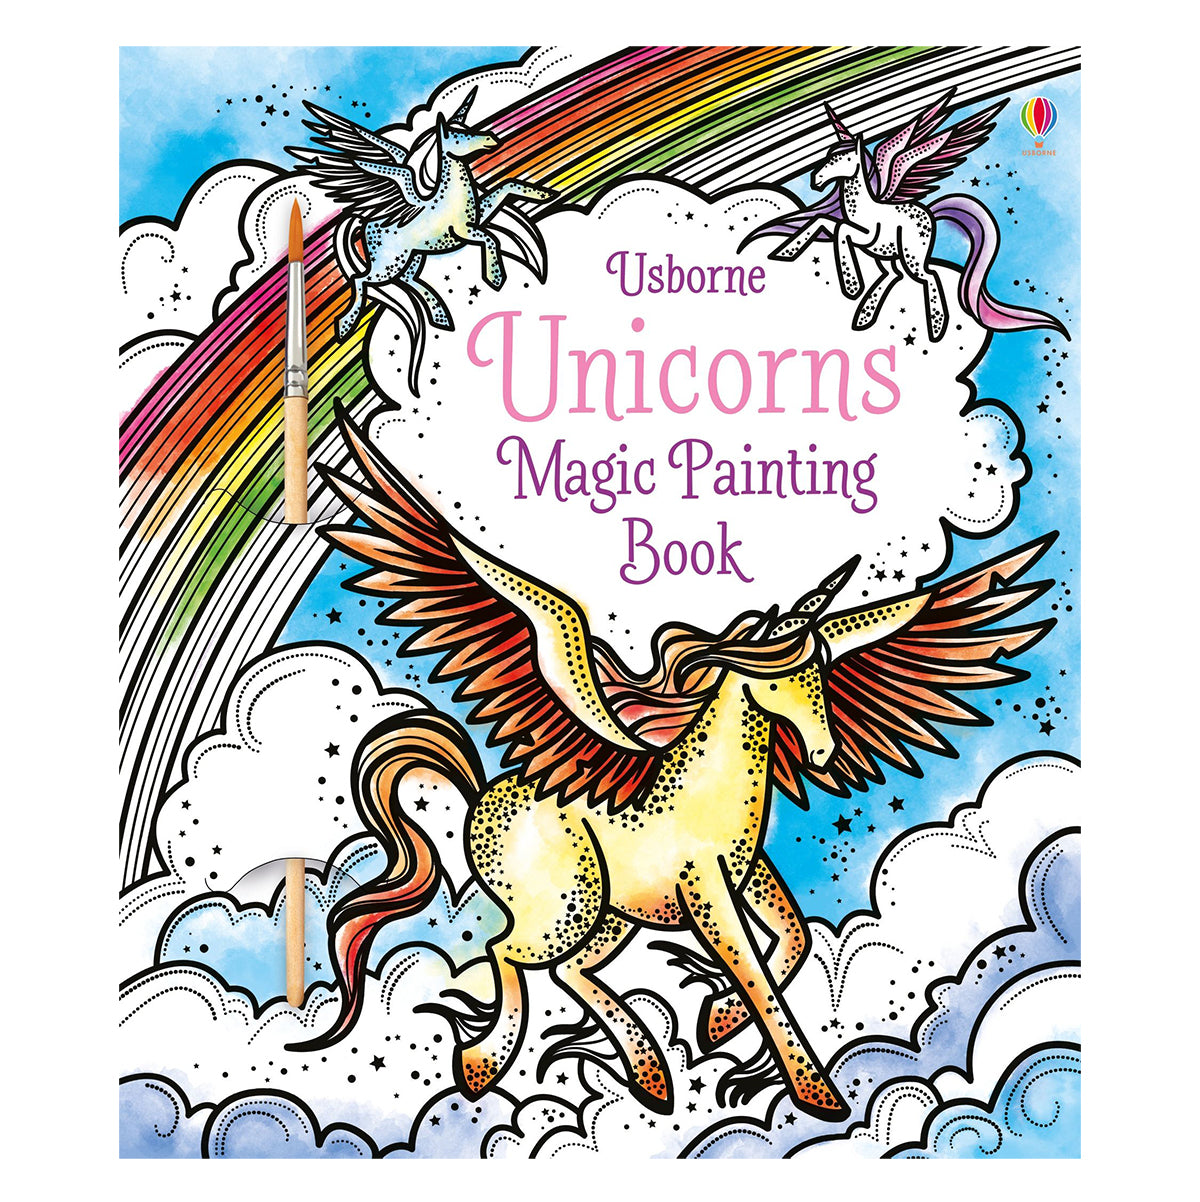 Magic painting book | Unicorn books | Kids books | Lucas loves cars 